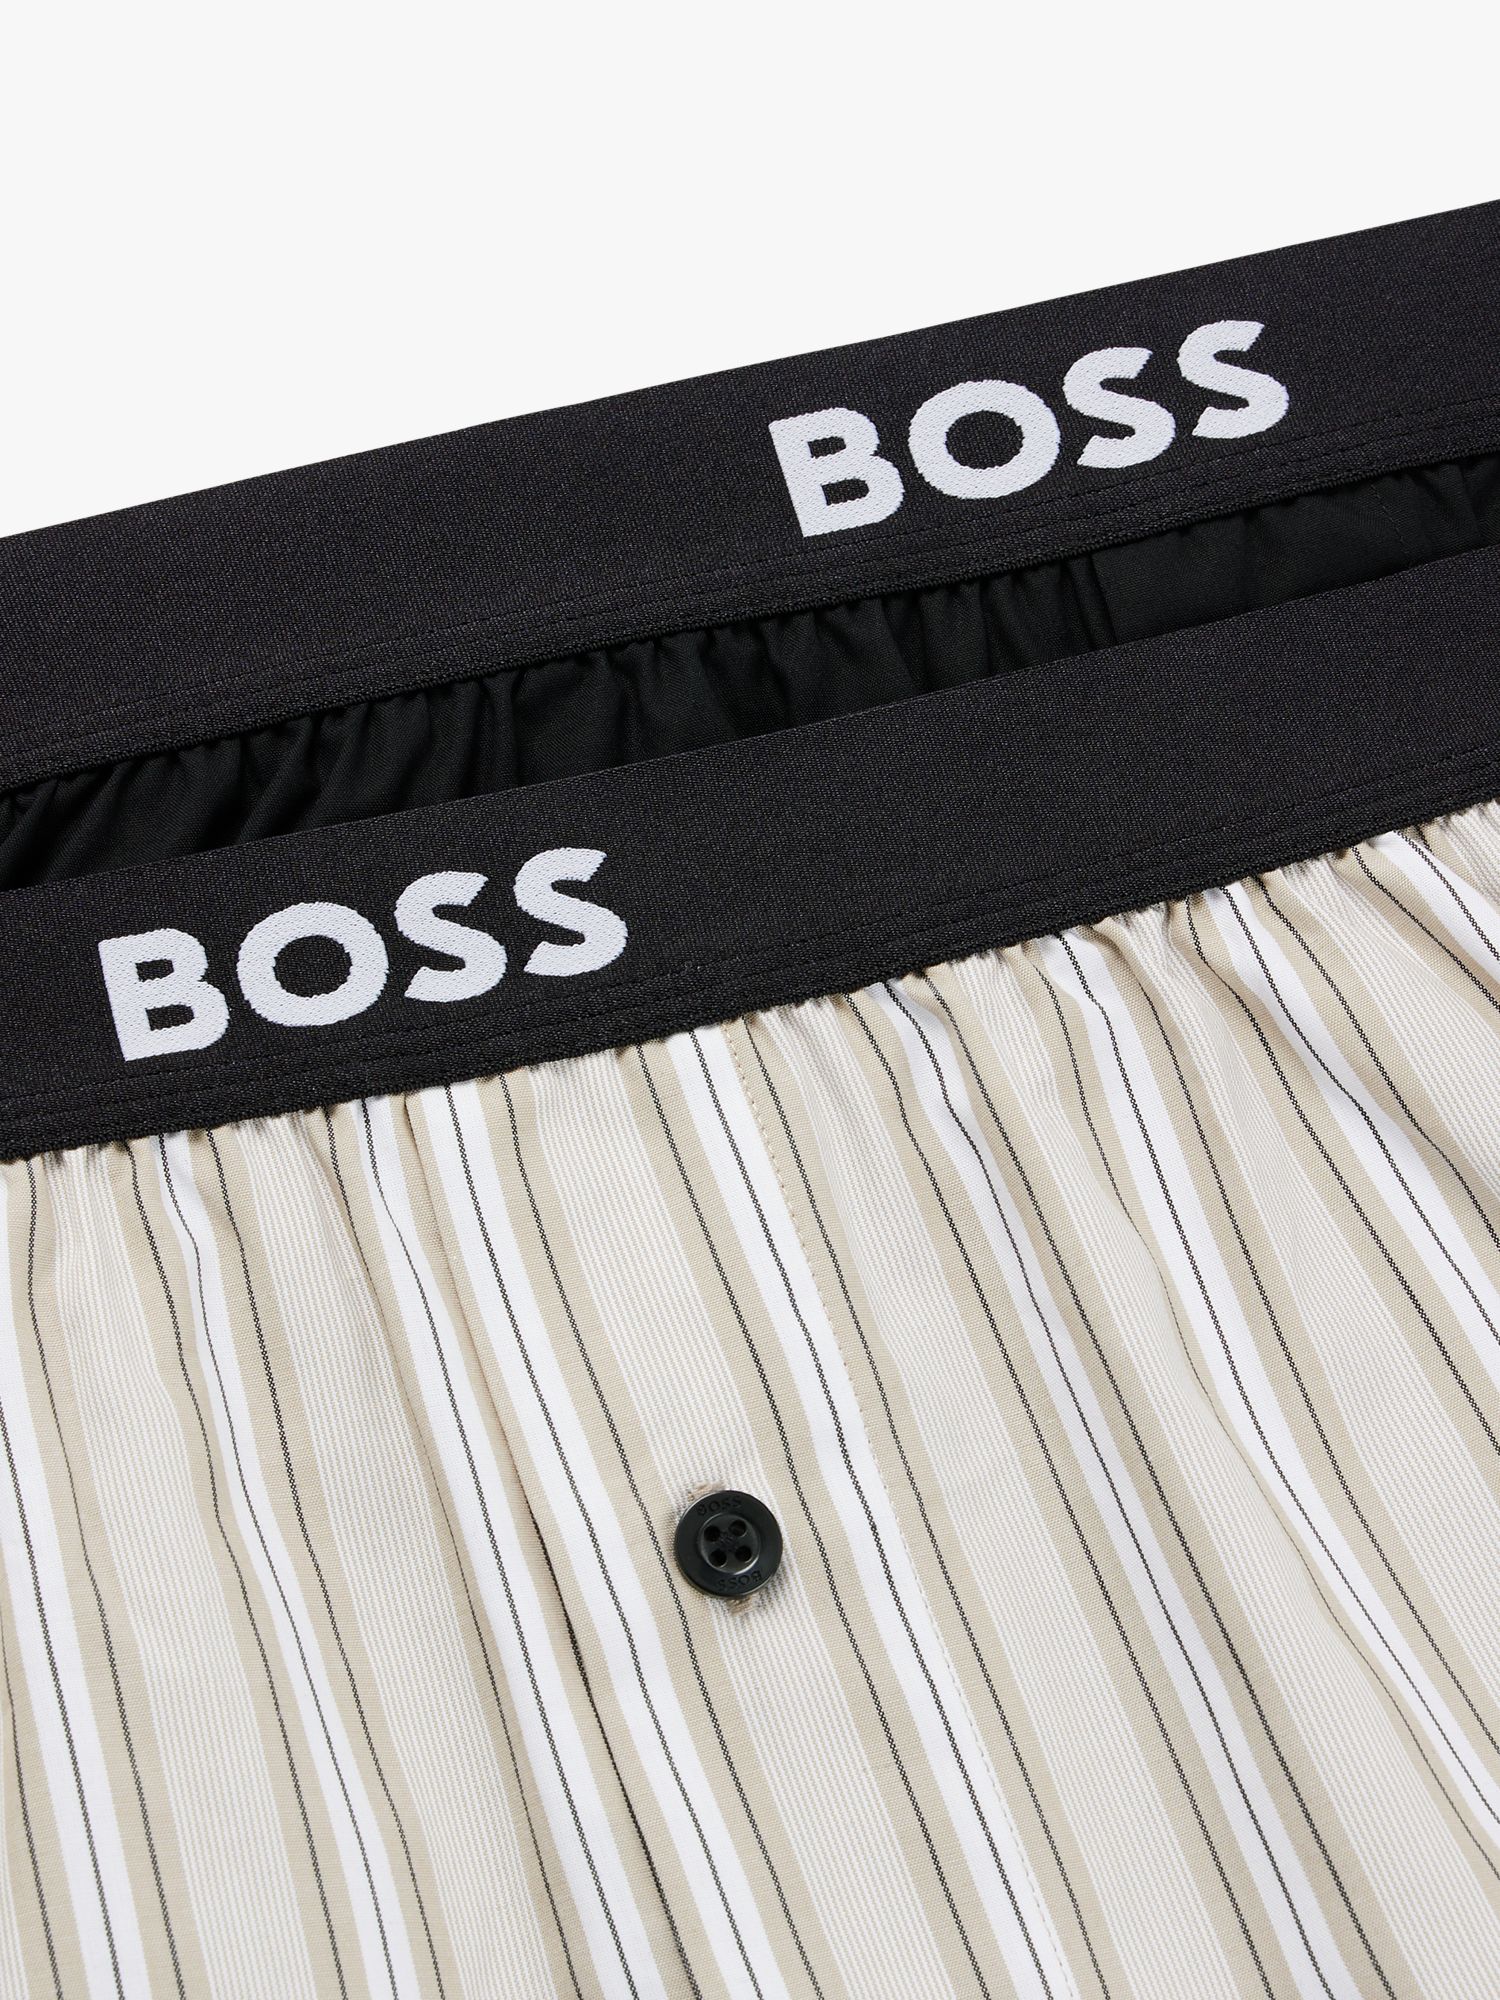 BOSS Stripe and Plain Cotton Boxers, Pack of 2, Dark Beige/Black, M